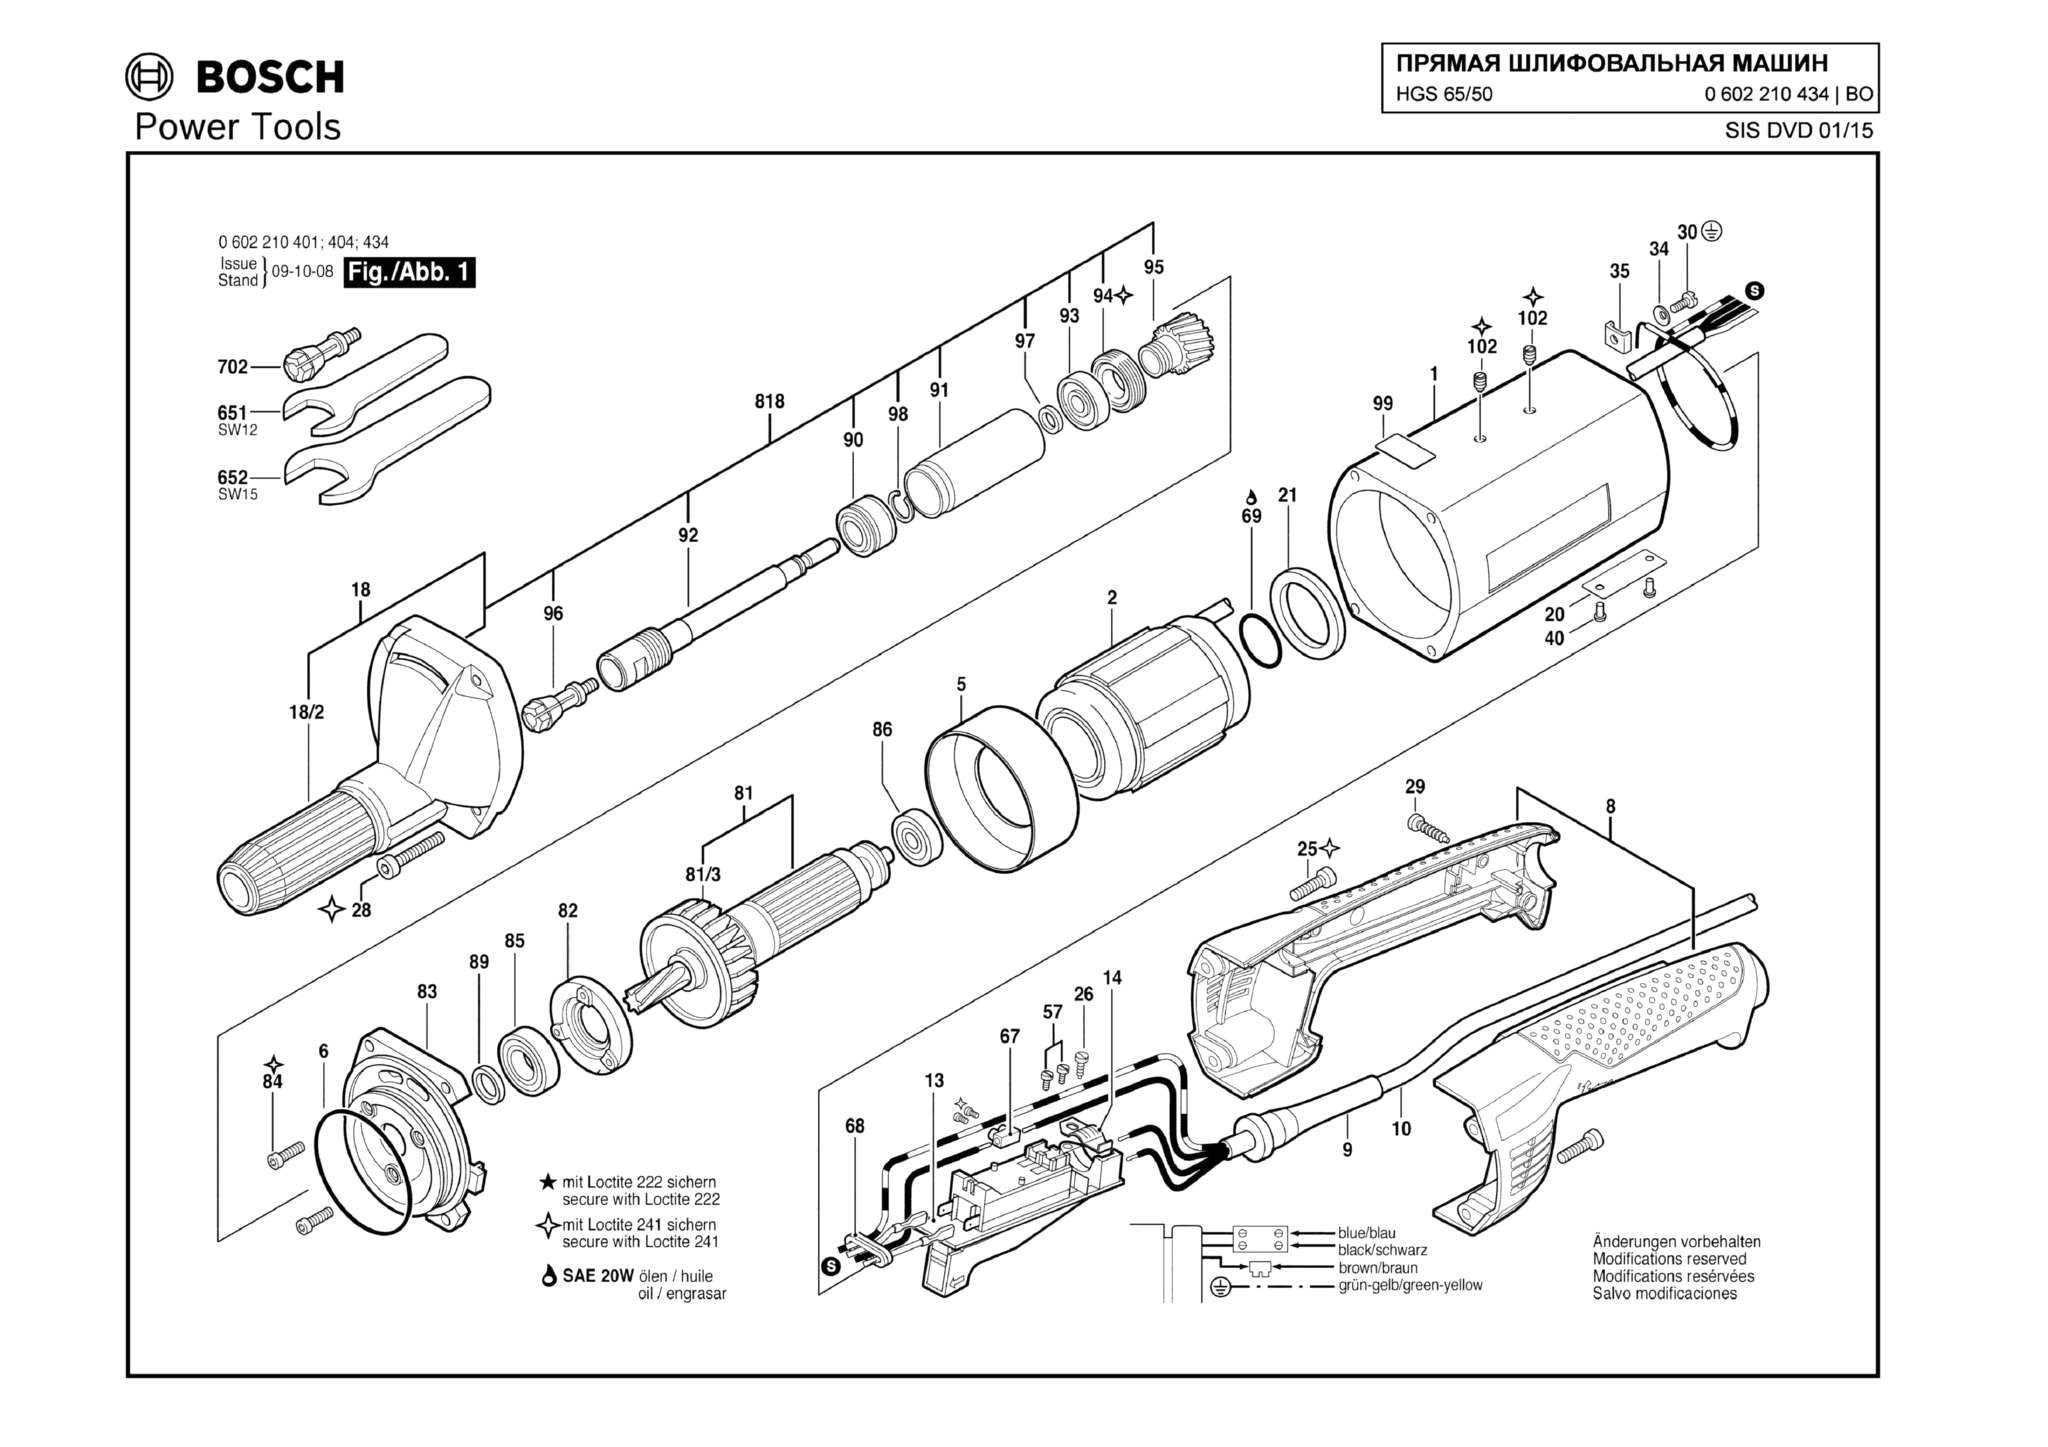 Запчасти, схема и деталировка Bosch HGS 65/50 (ТИП 0602210434)